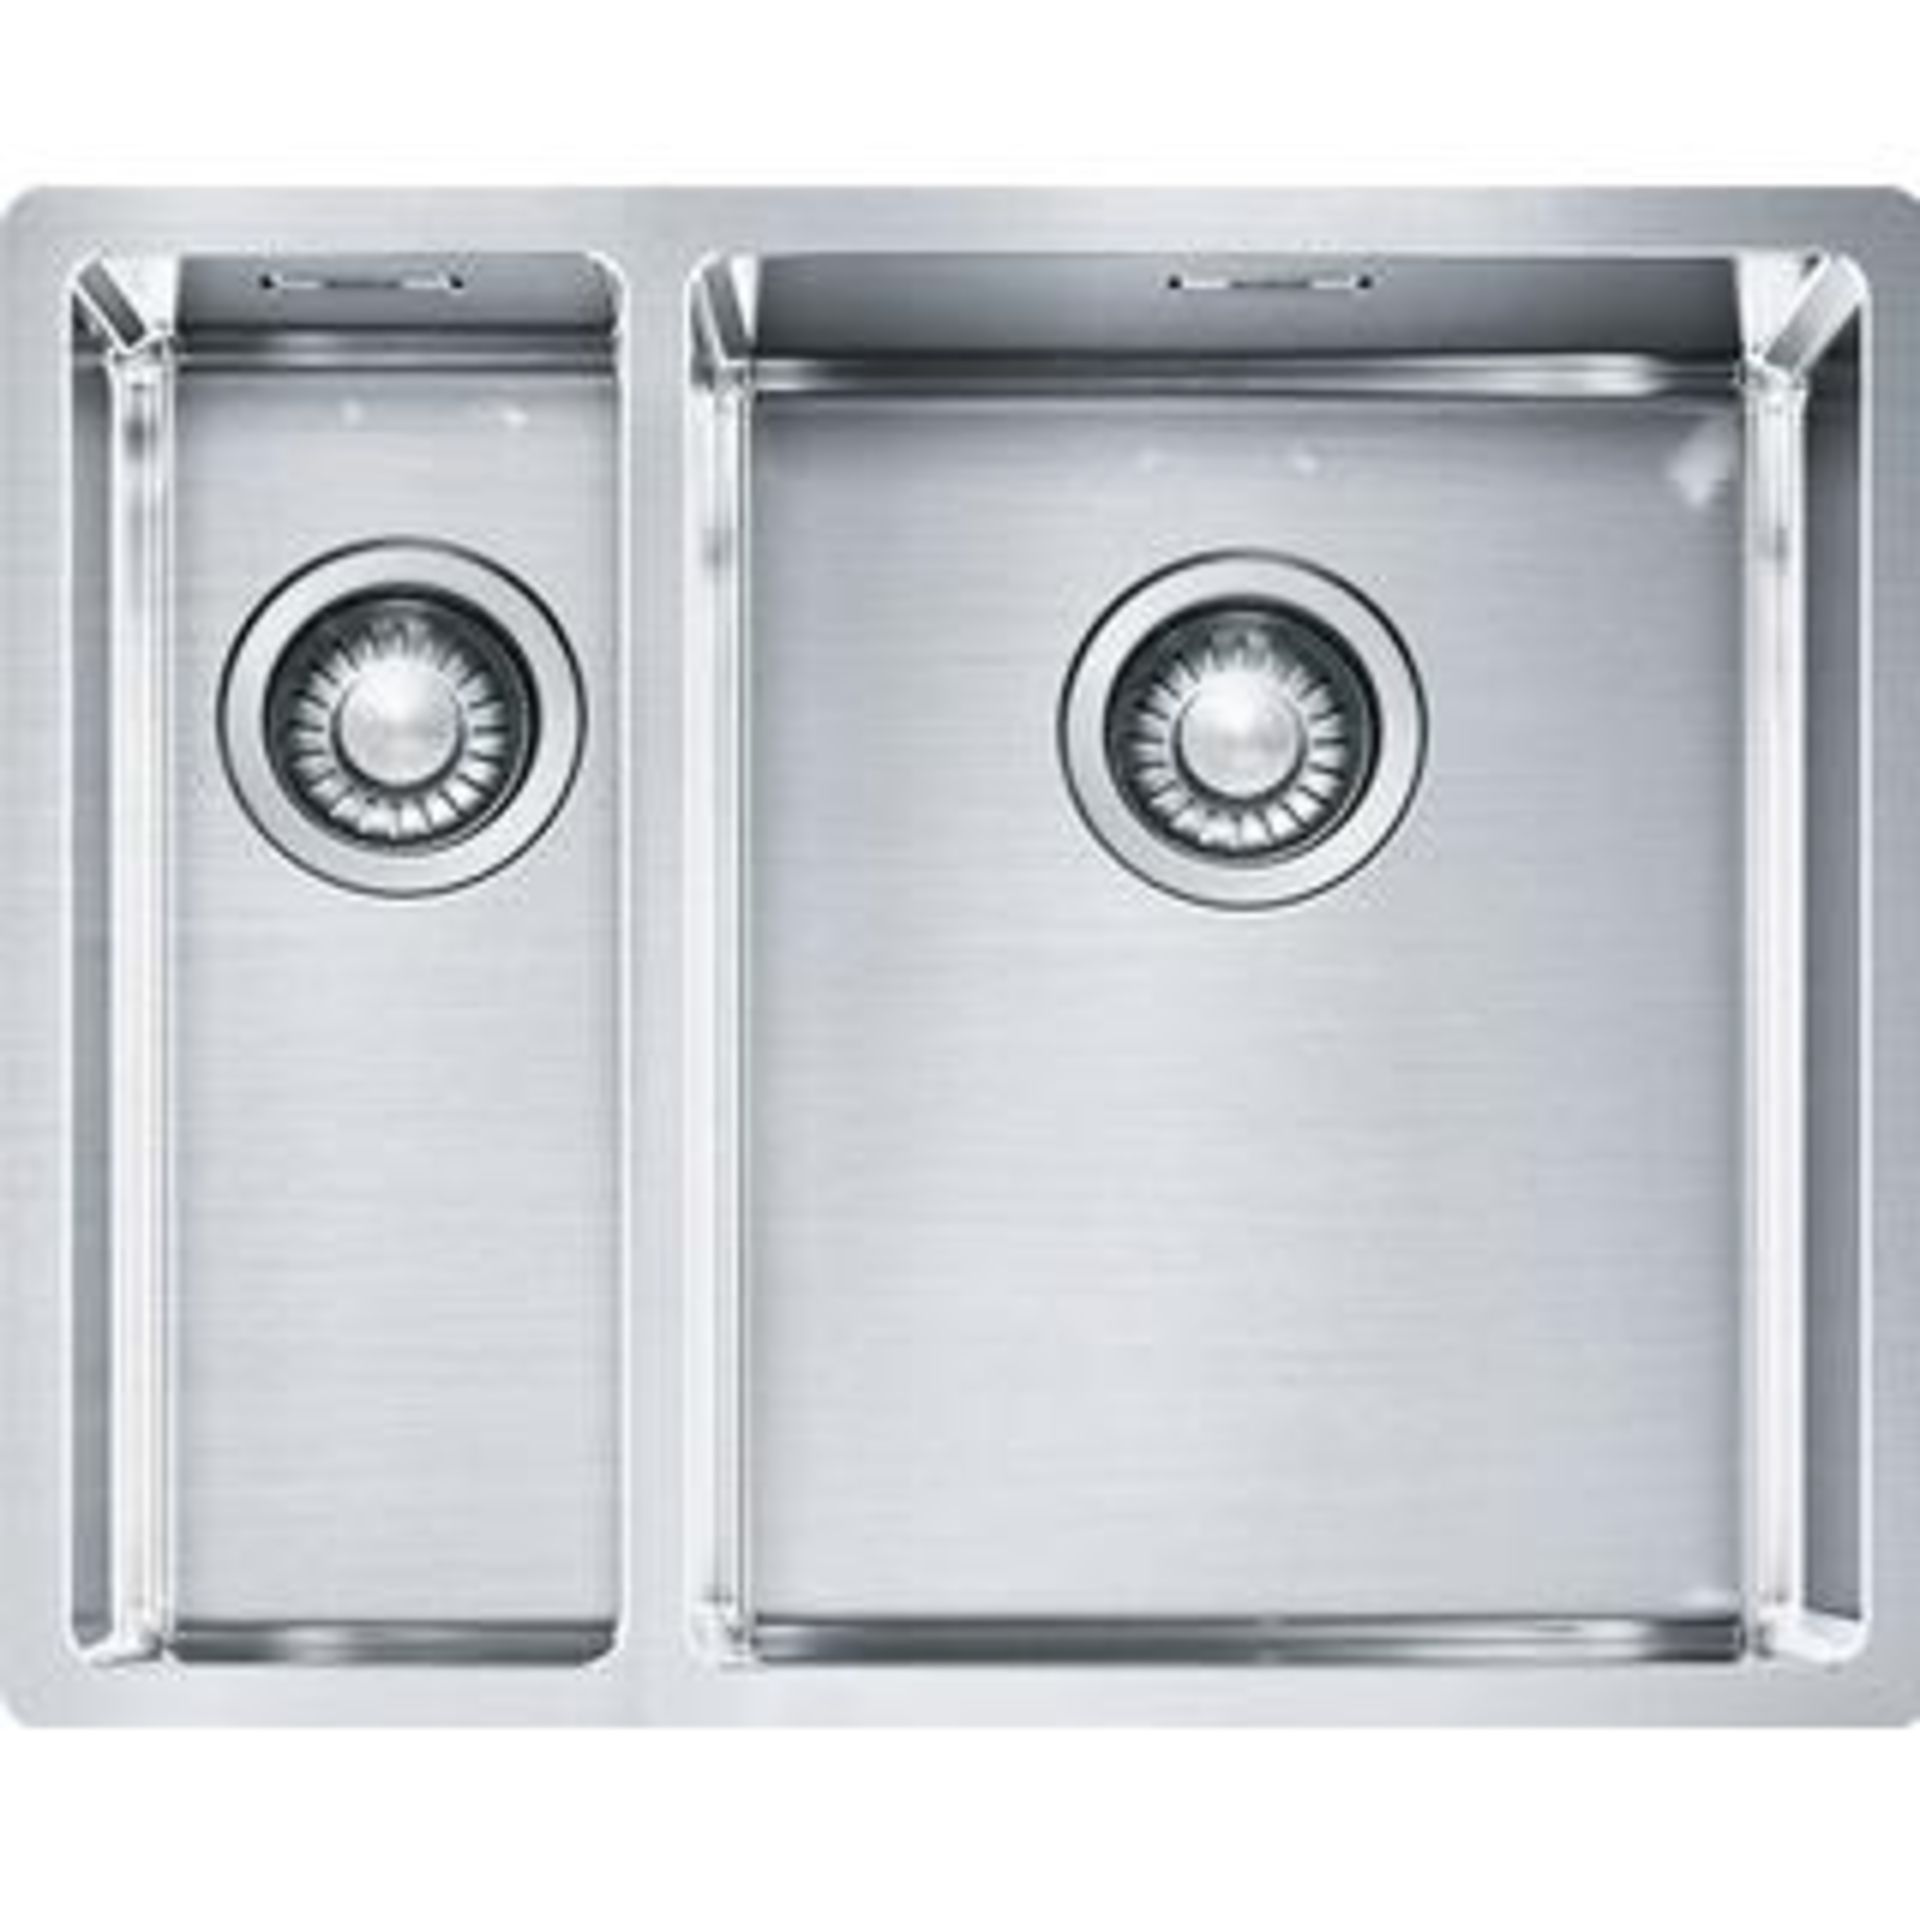 NEW 1 X Franke Box BXX 160 34-16 (127.0369.916). Kitchen-Sink, Shape: Rectangular, Material: